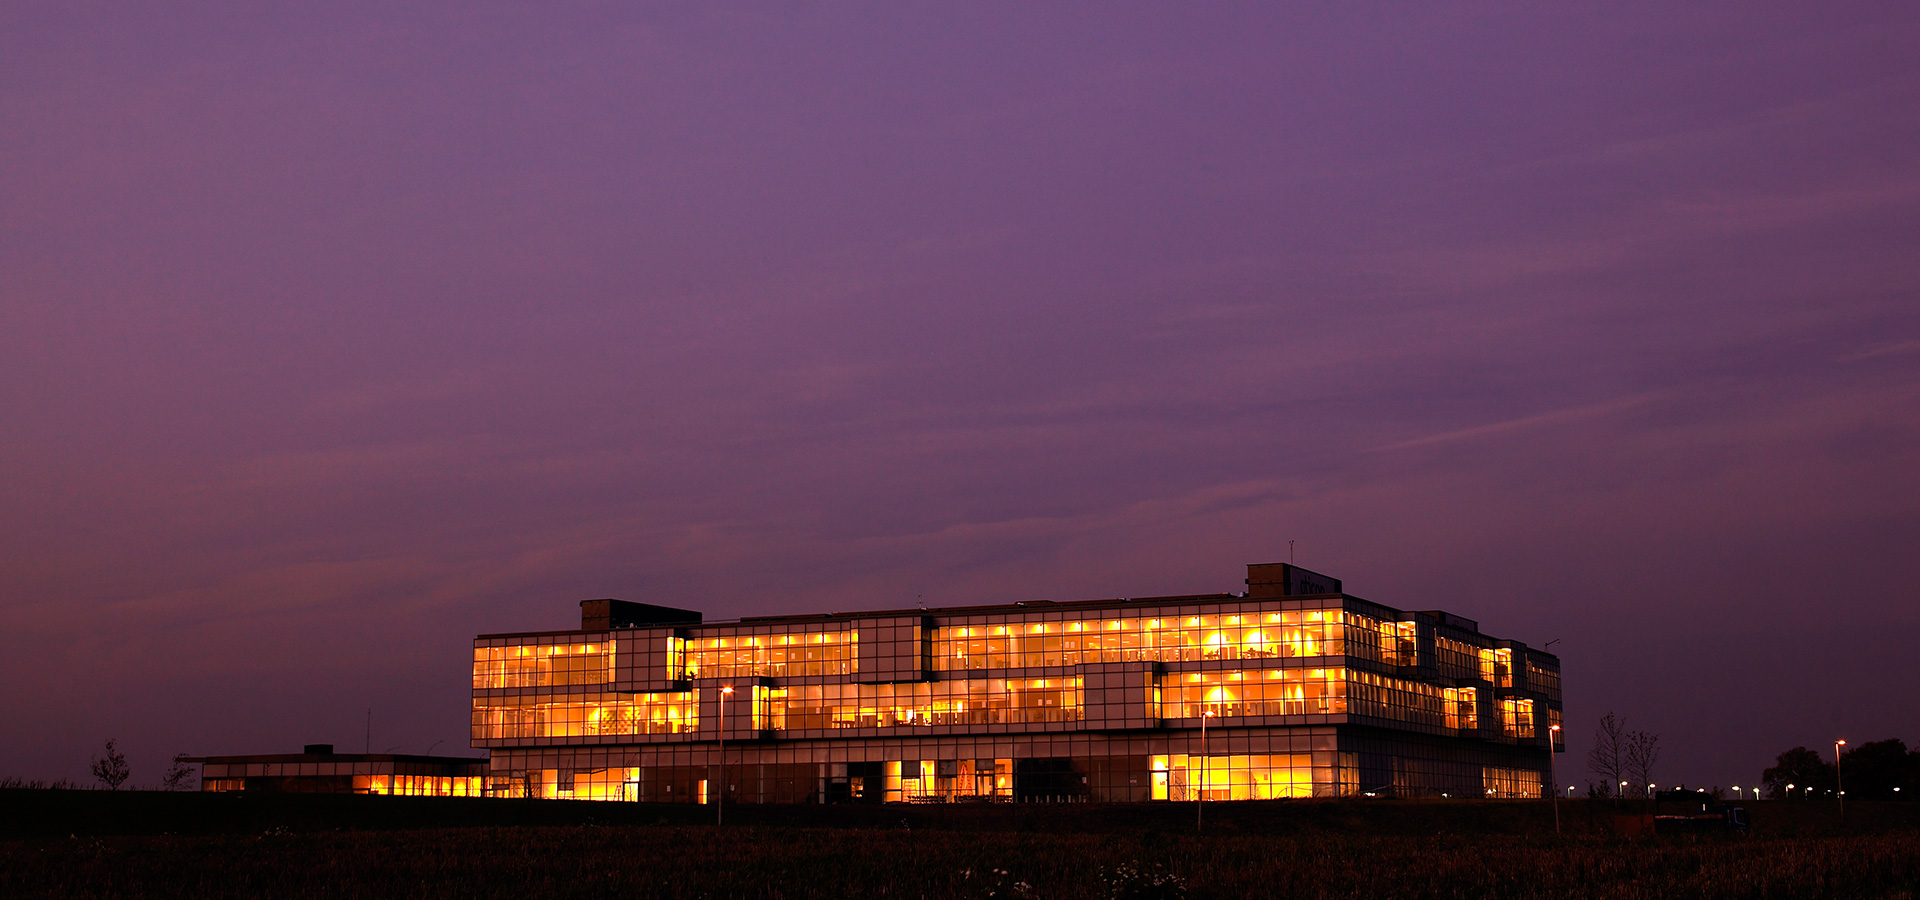 Oticon Denmark global headquarters building at night